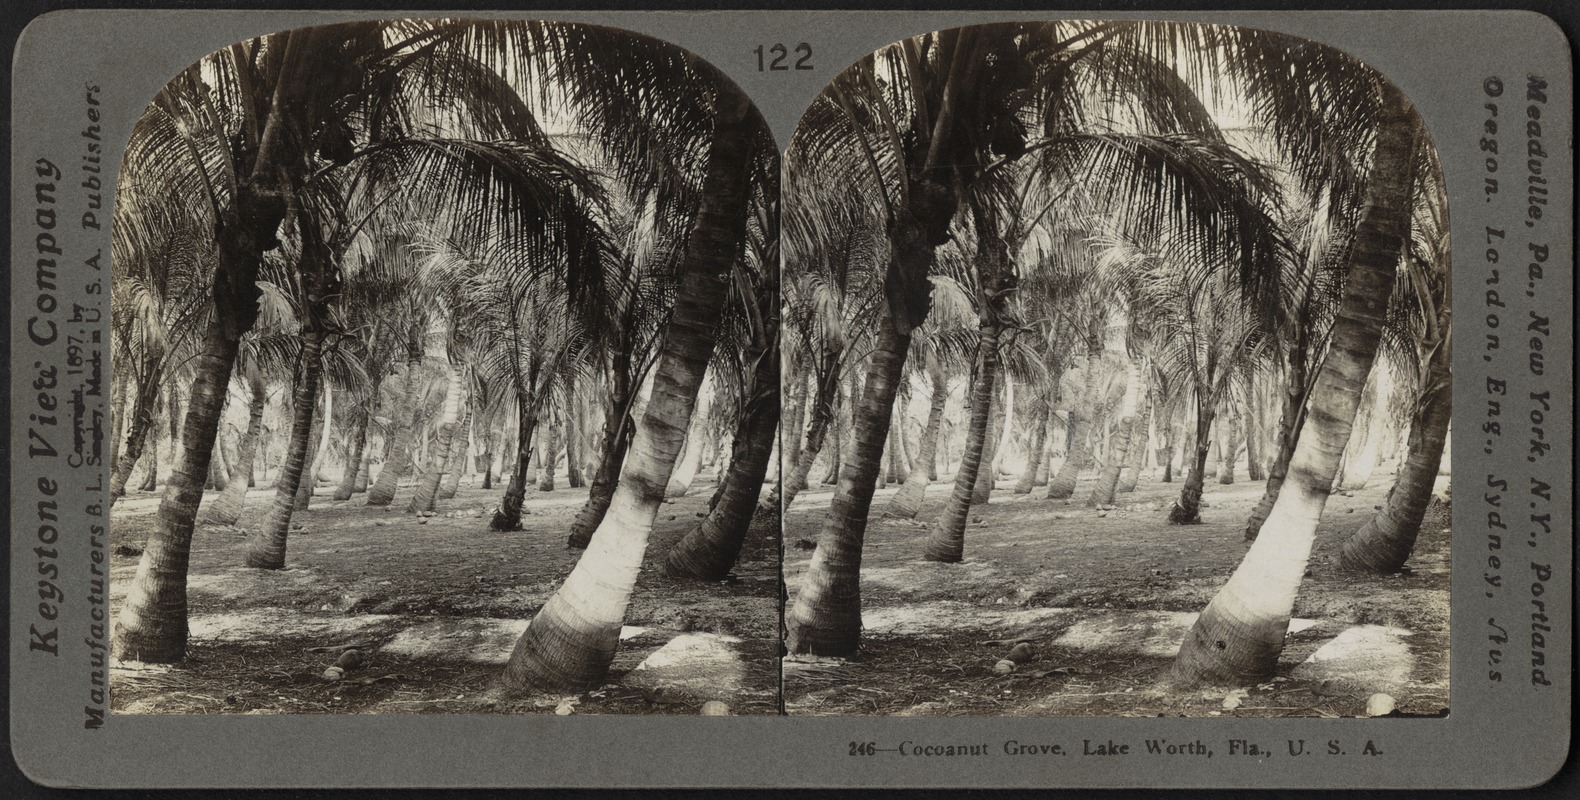 Cocoanut grove, Lake Worth, Florida